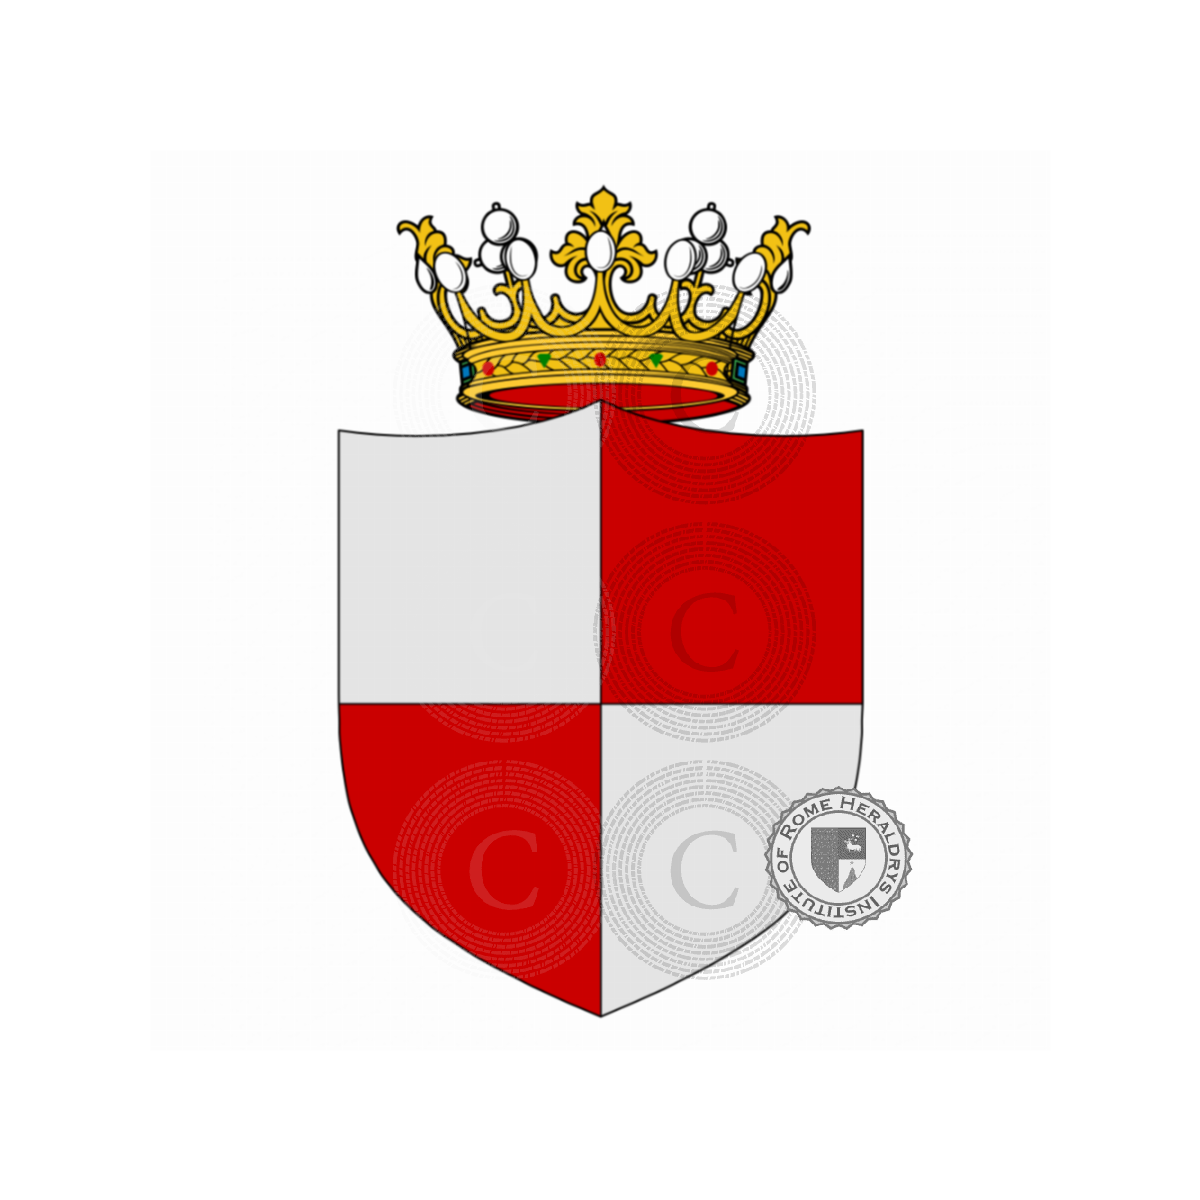 Wappen der Familiede Nobili, de Nobili,Denobili,Nobile,Nobilia